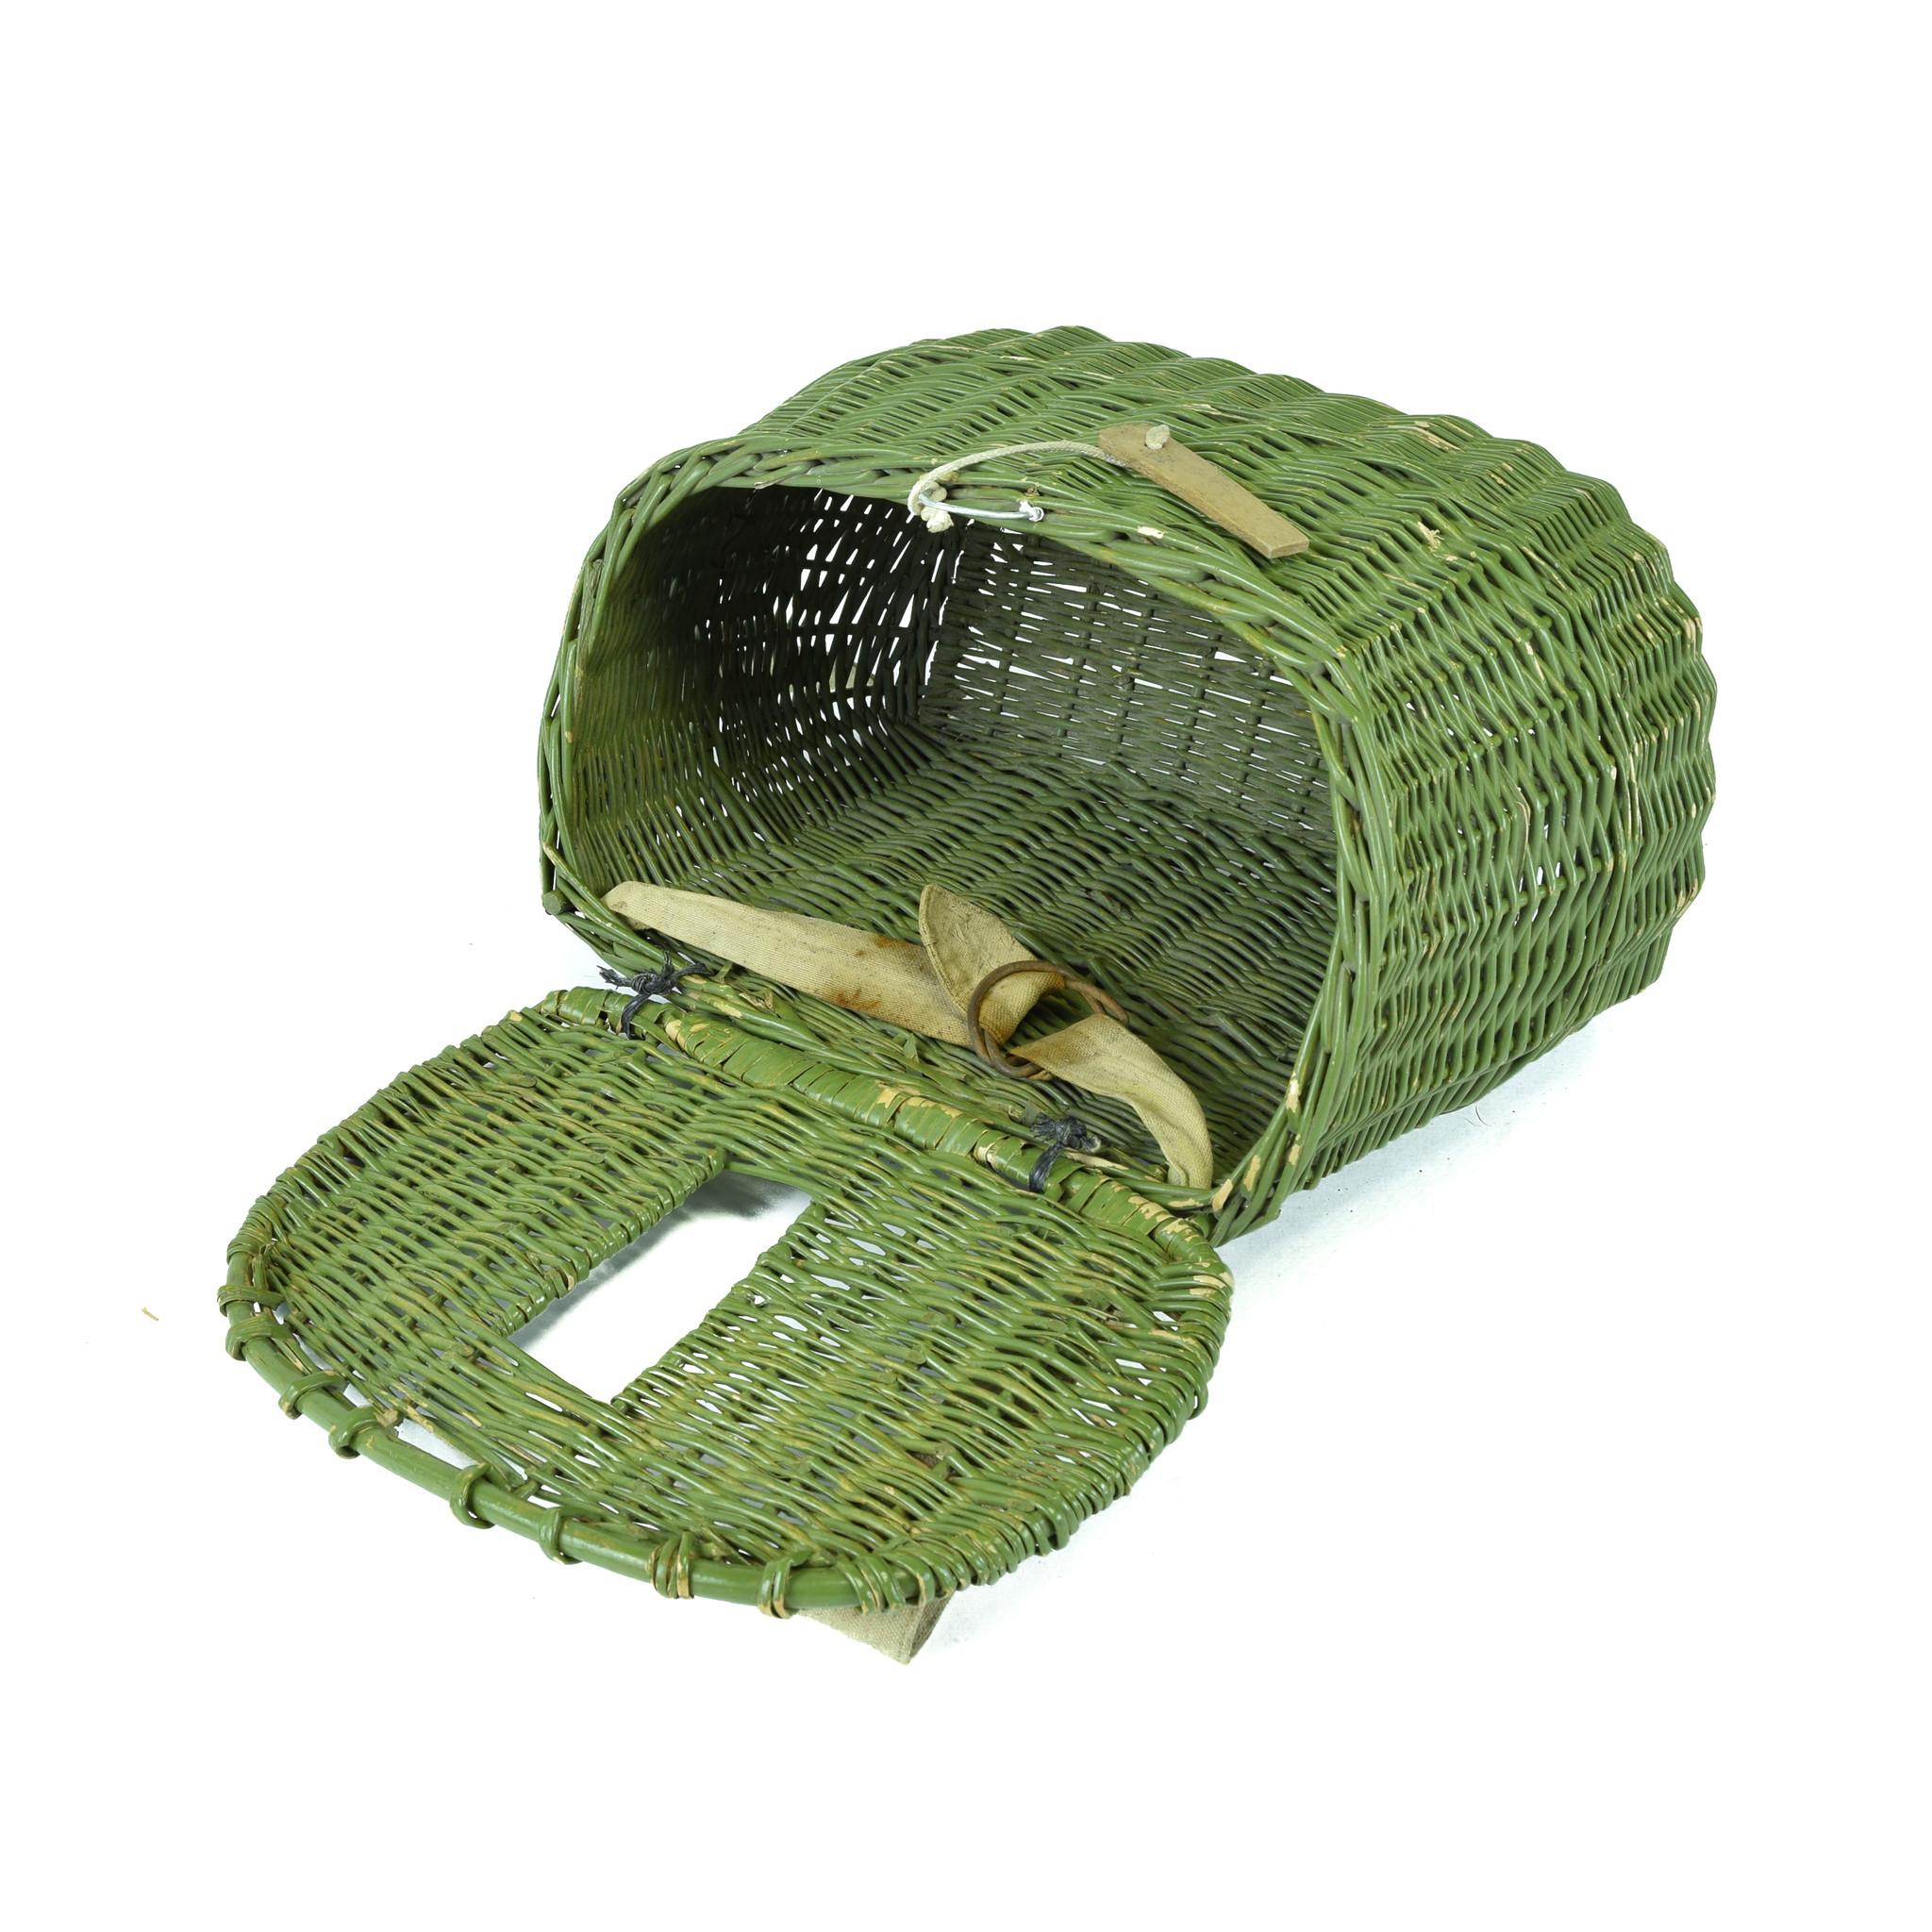 Native American Duckweed Green Creel For Sale